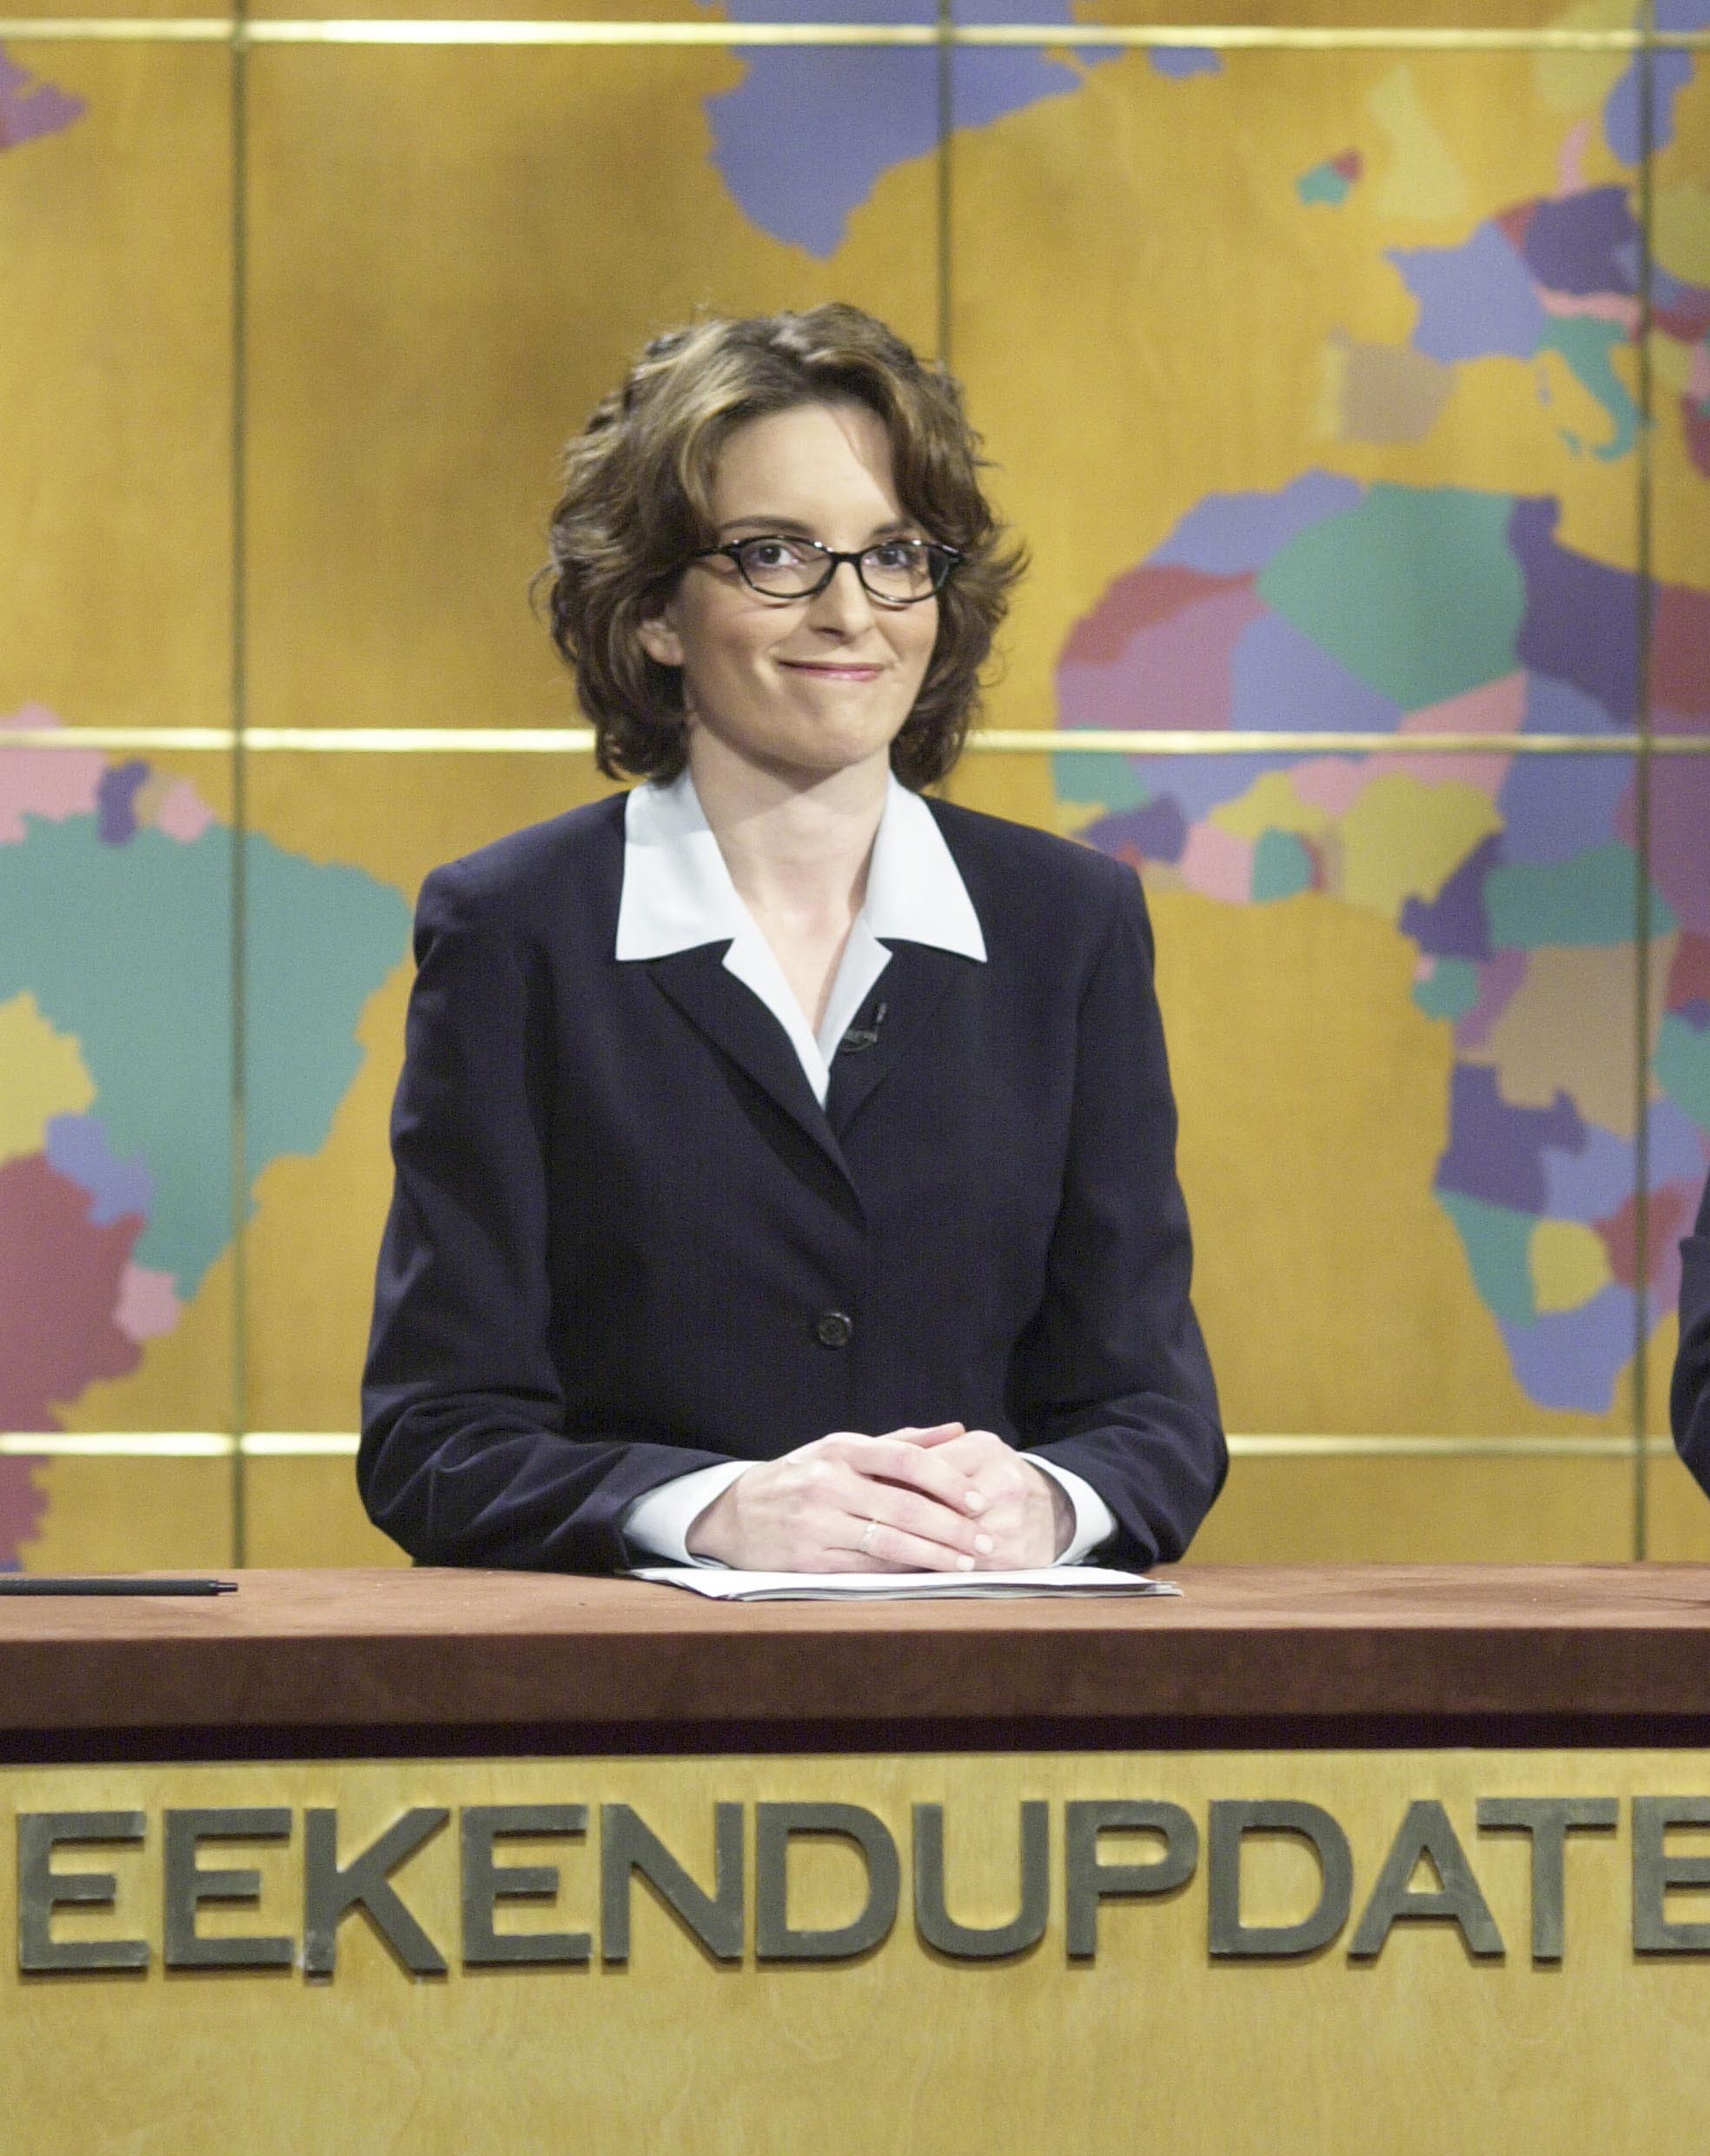 Tina Fey, Saturday Night Live, Weekend Update